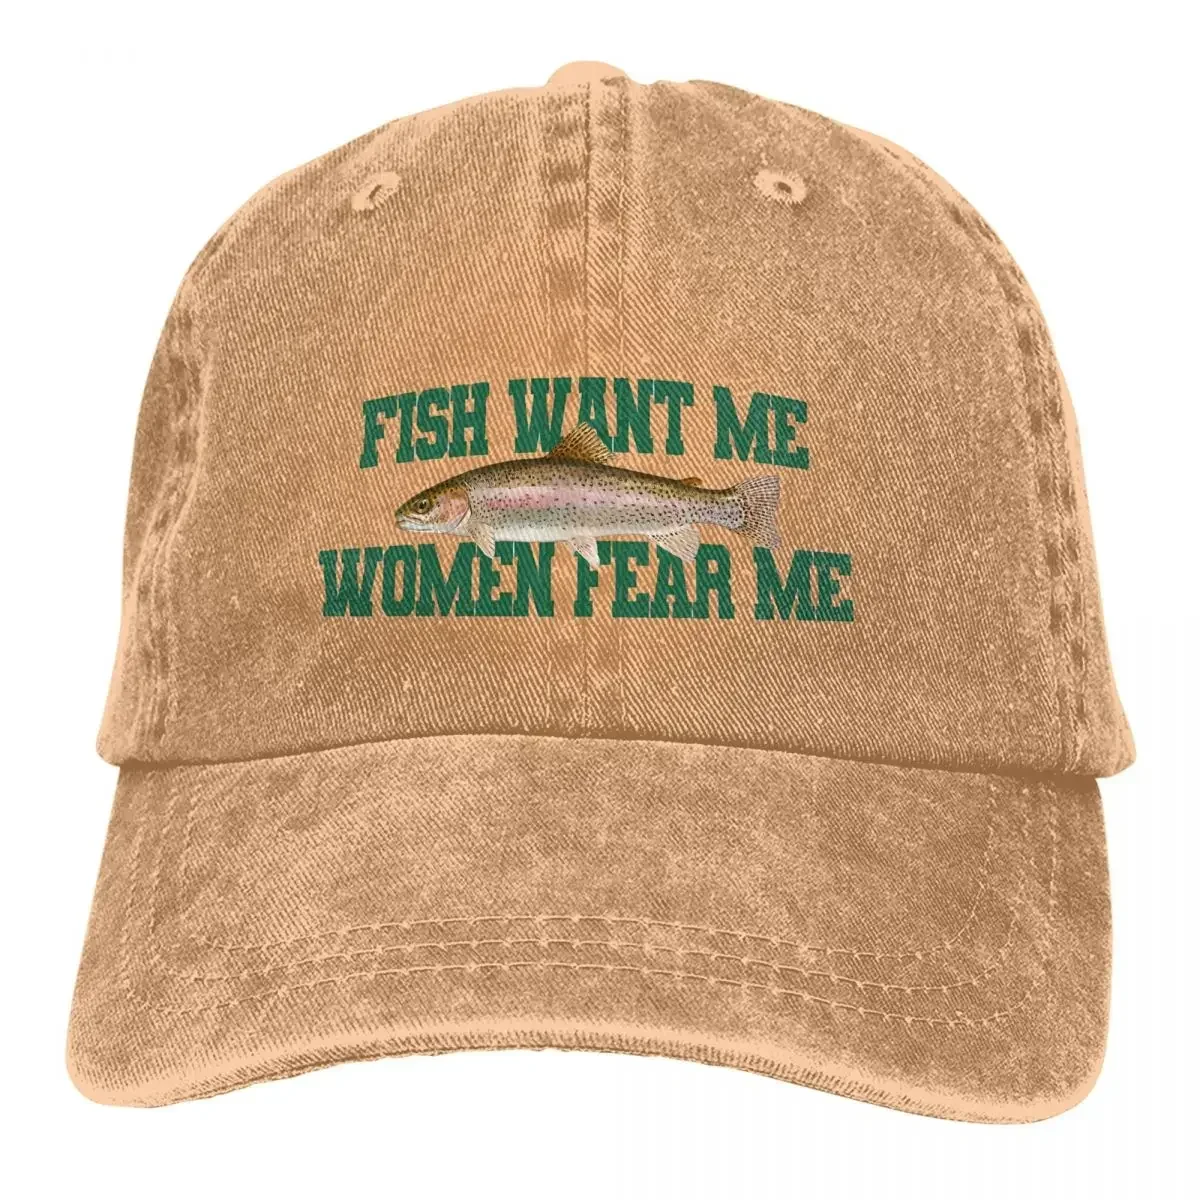 

Pure Color Dad Hats Fish Want Me Women Fear Me Meme Classic Women's Hat Sun Visor Baseball Caps Peaked Cap